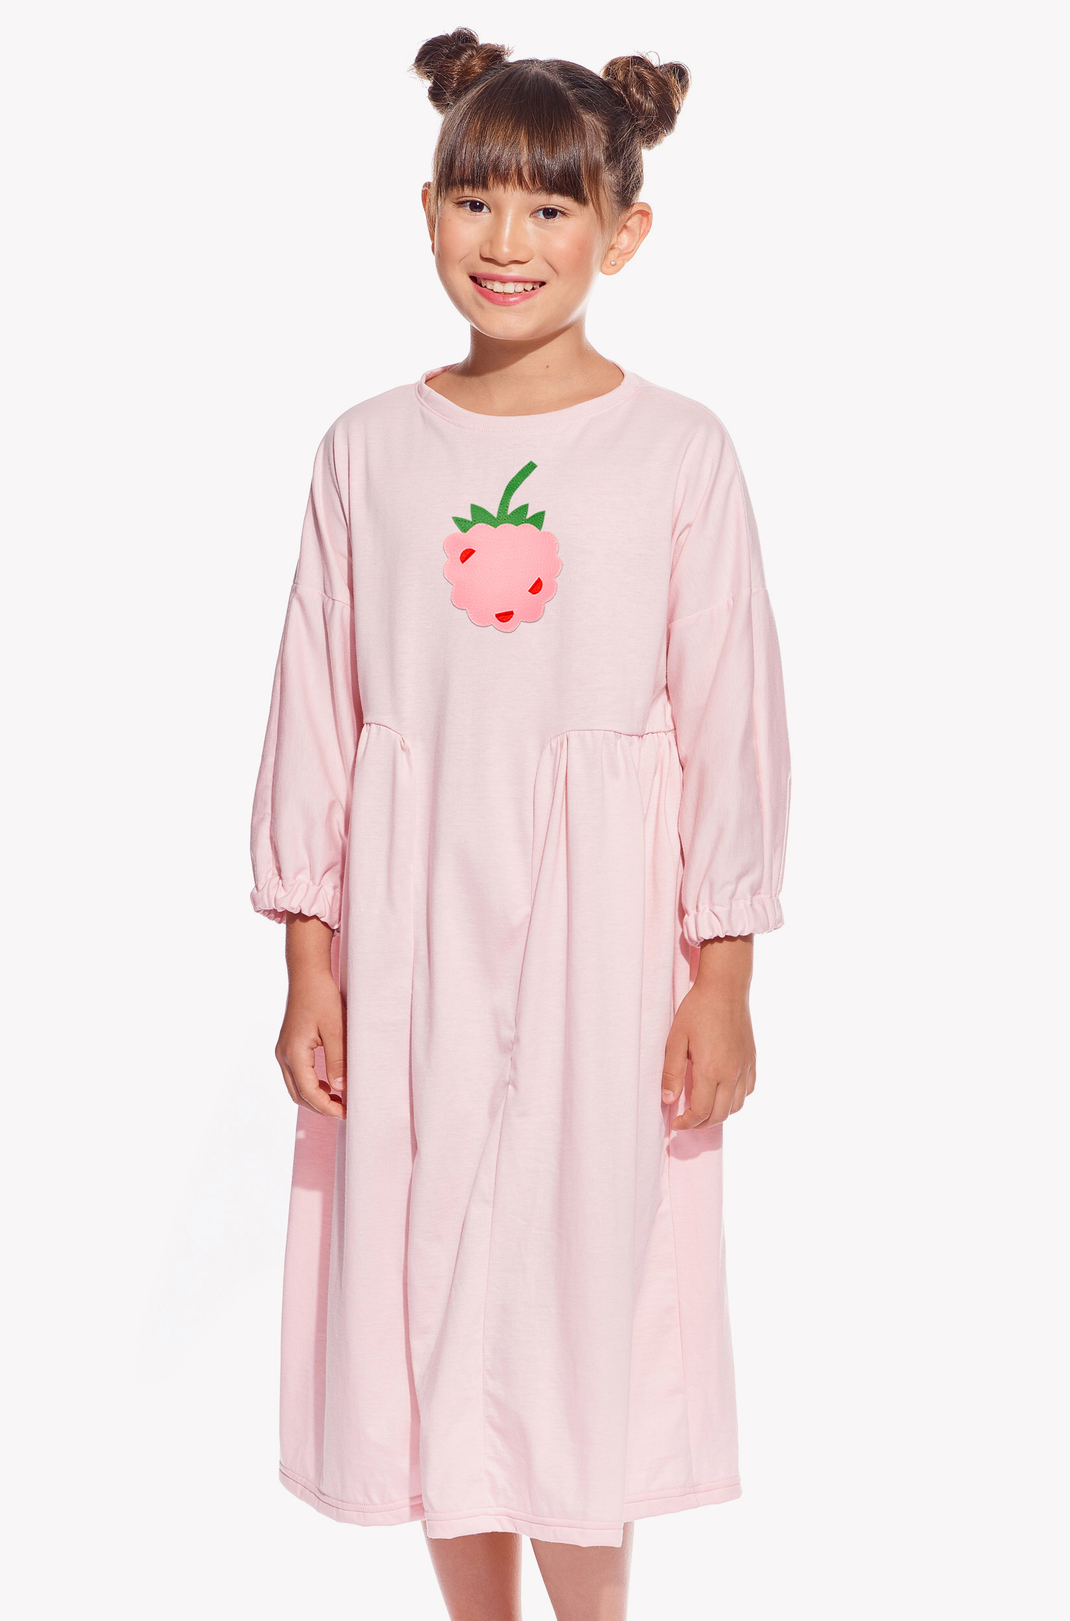 Dresses with raspberry